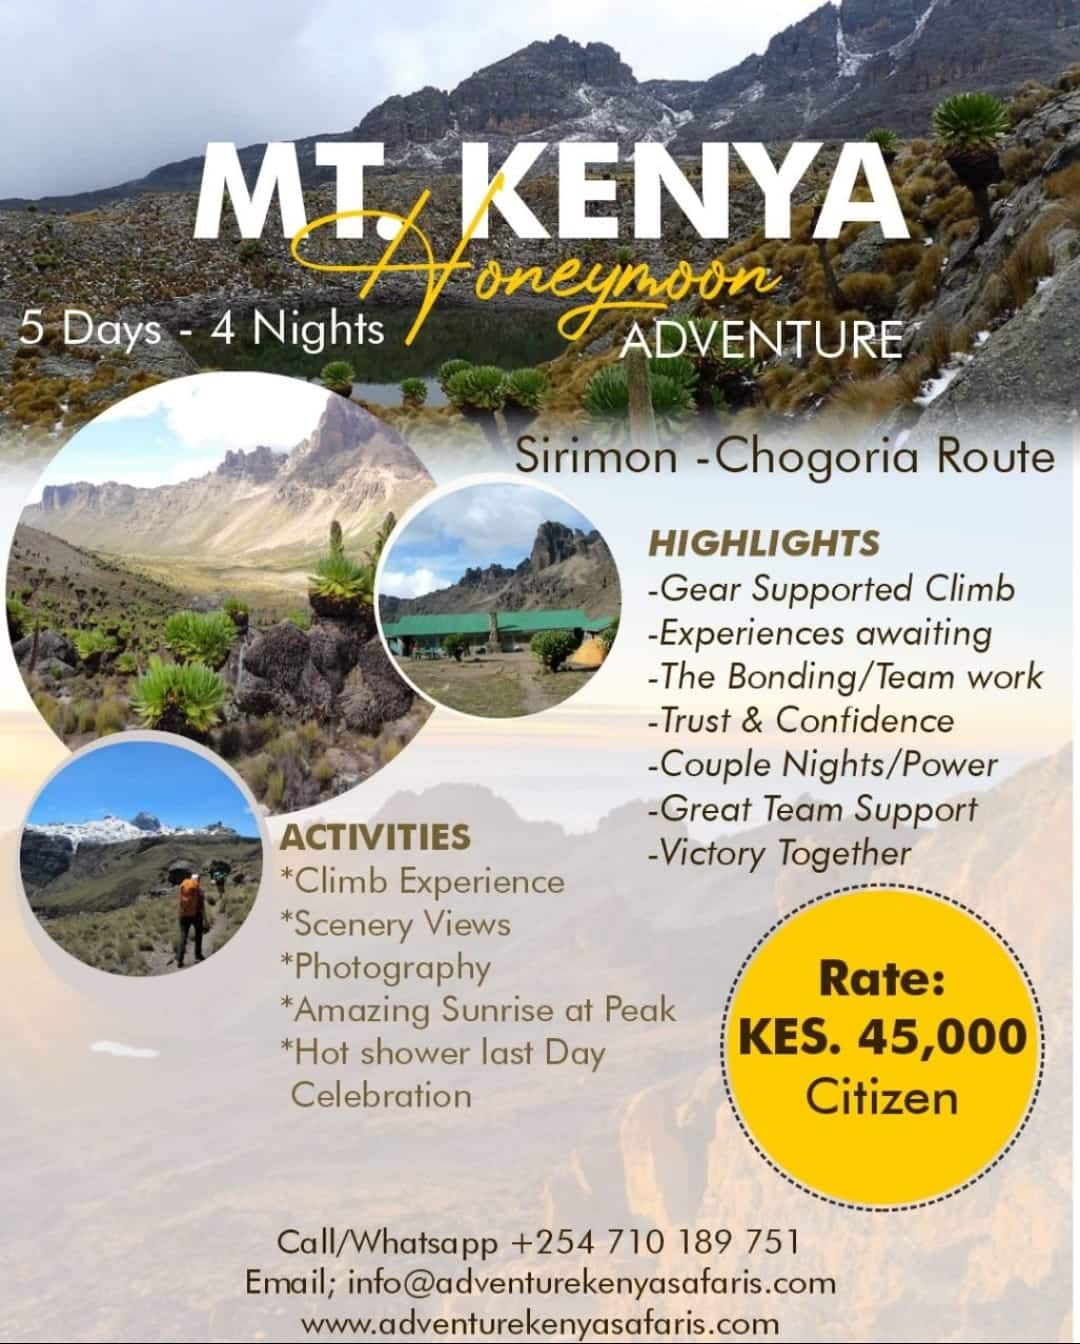 Mt Kenya Climbing Honeymoon package